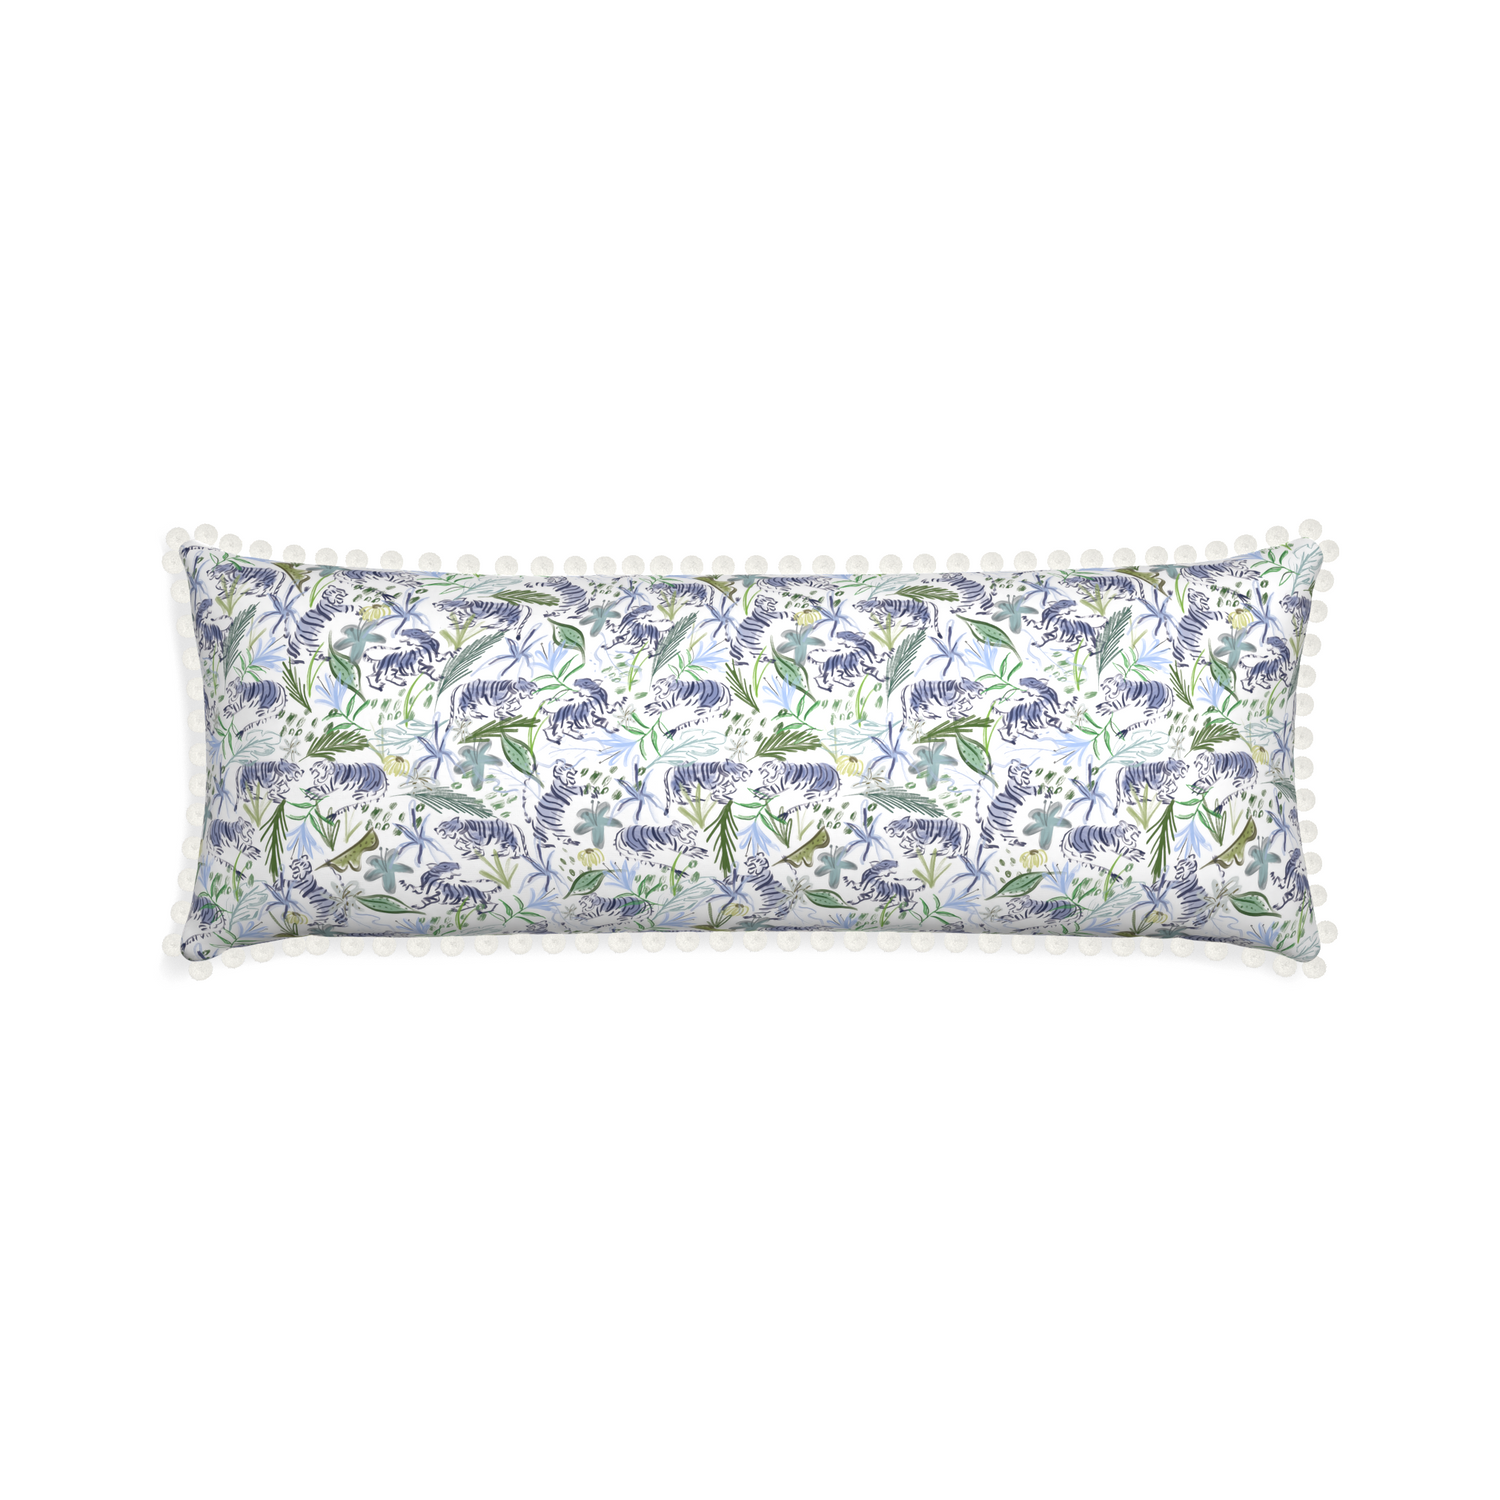 Xl-lumbar frida green custom pillow with snow pom pom on white background